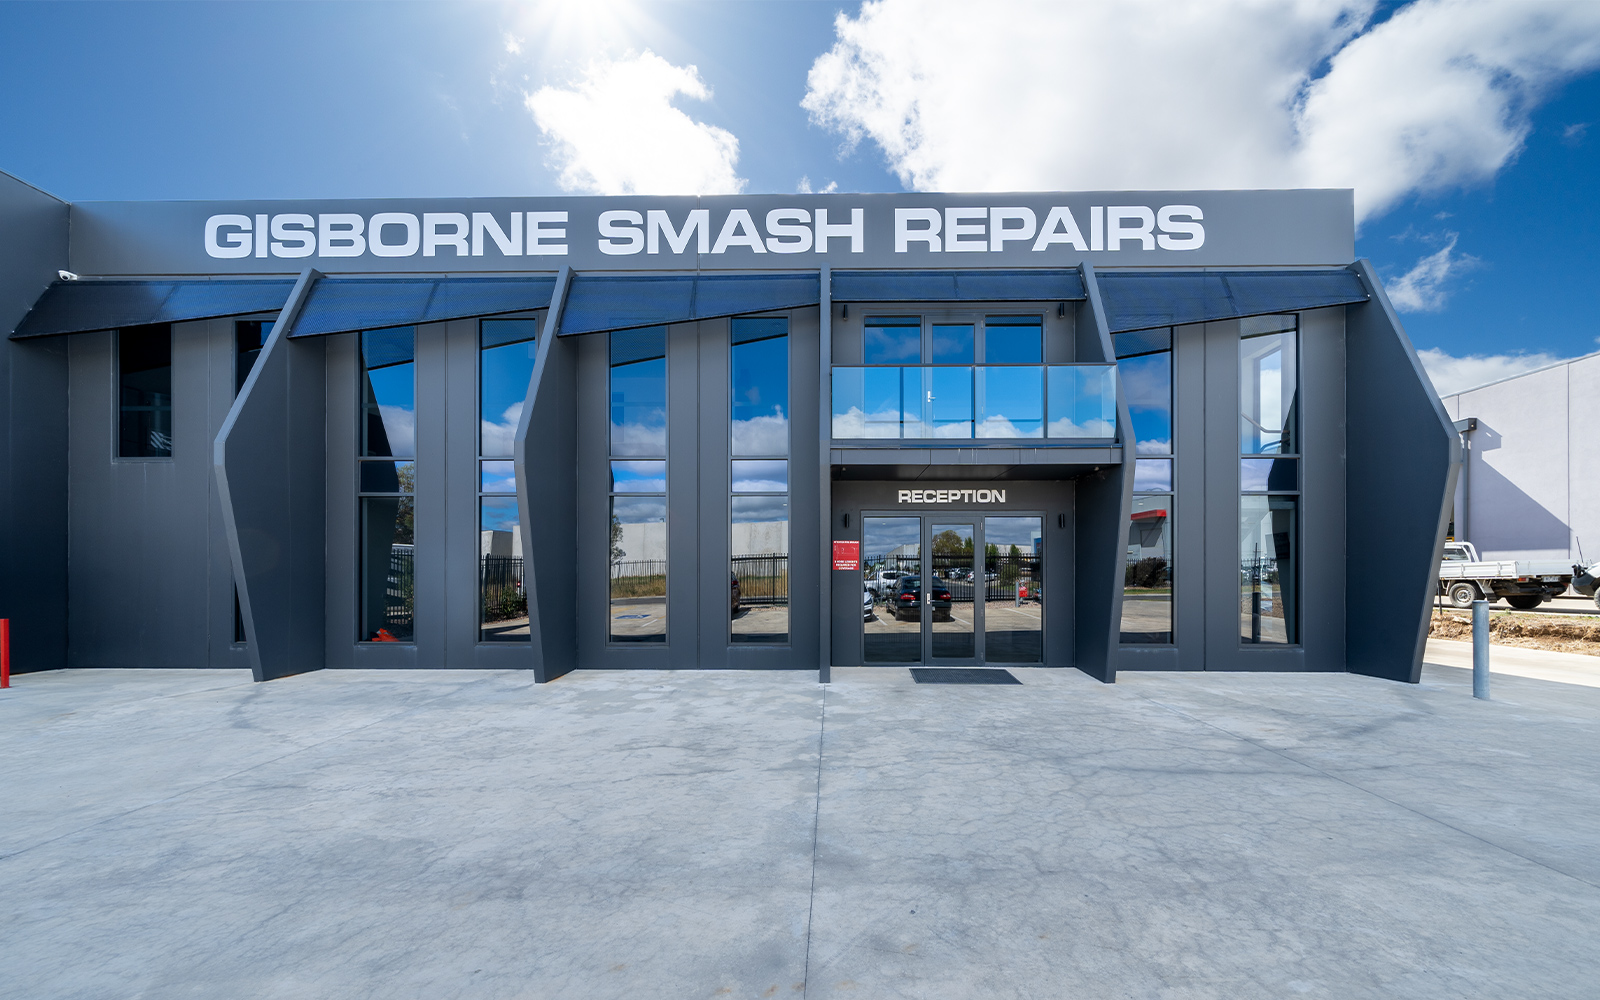 Gisborne Smash Repairs combined showroom and workshop